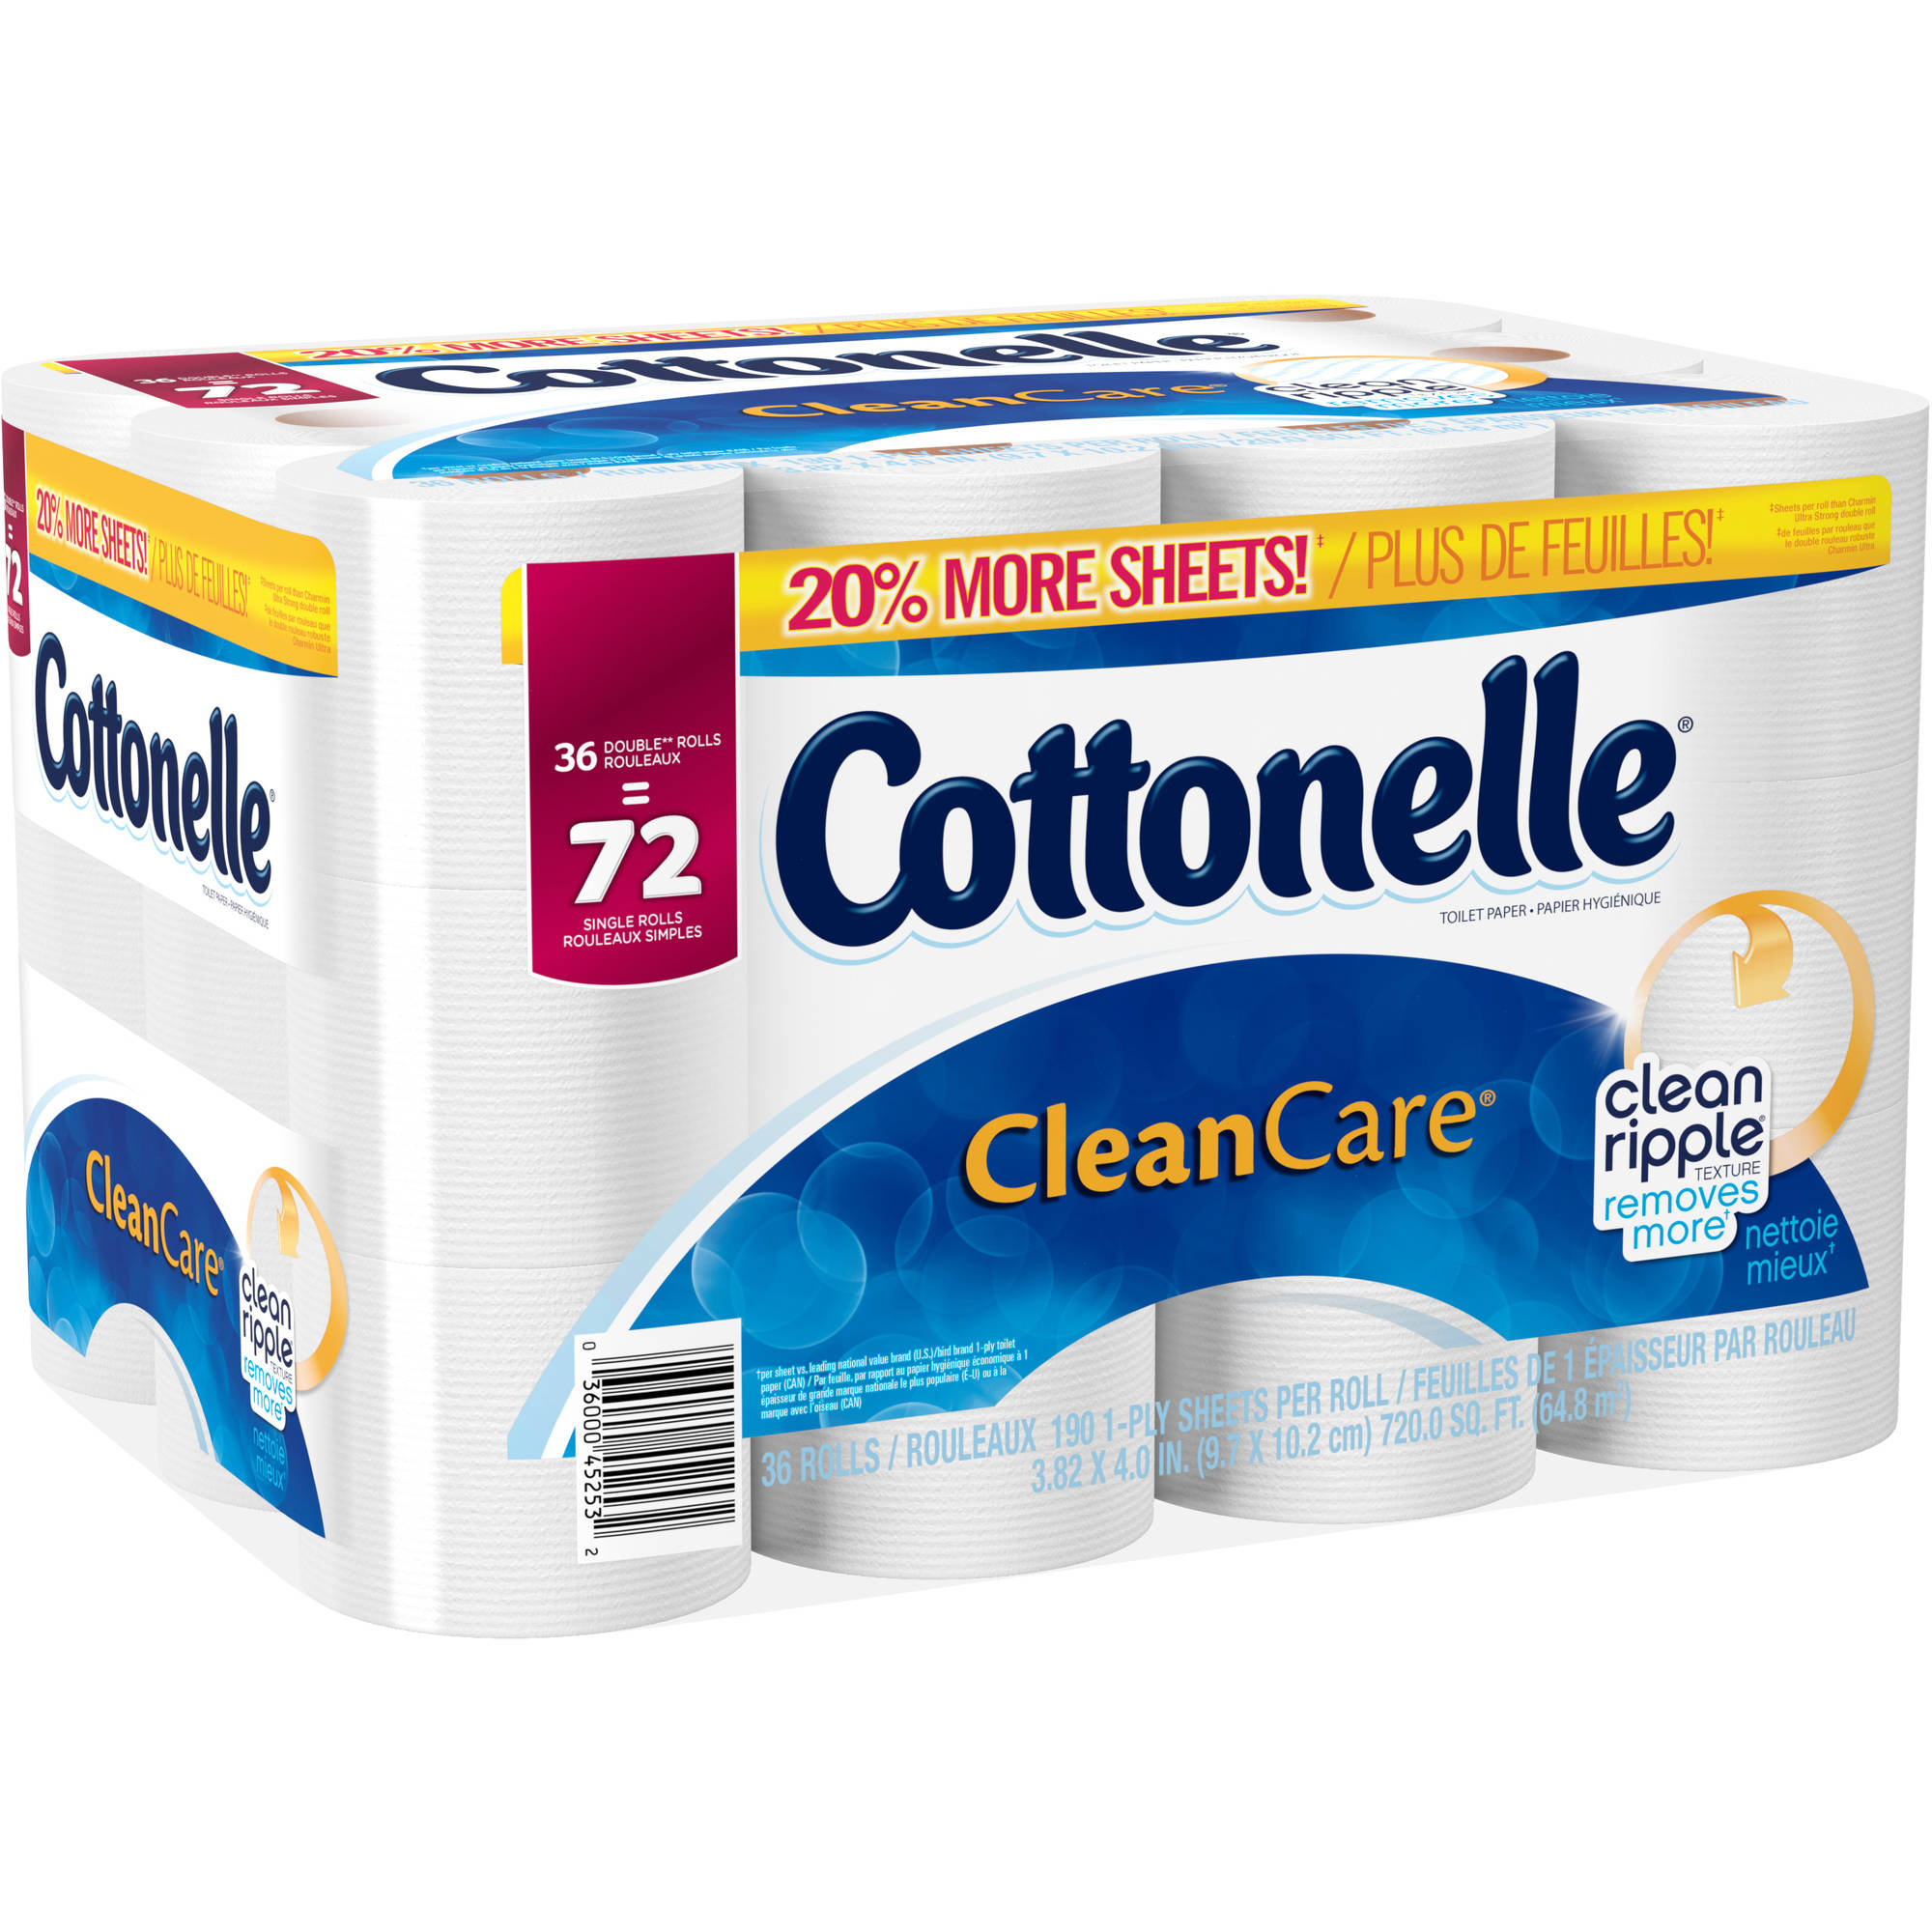 Cottonelle Clean Care Toilet Paper, 36 Double Rolls - image 3 of 7